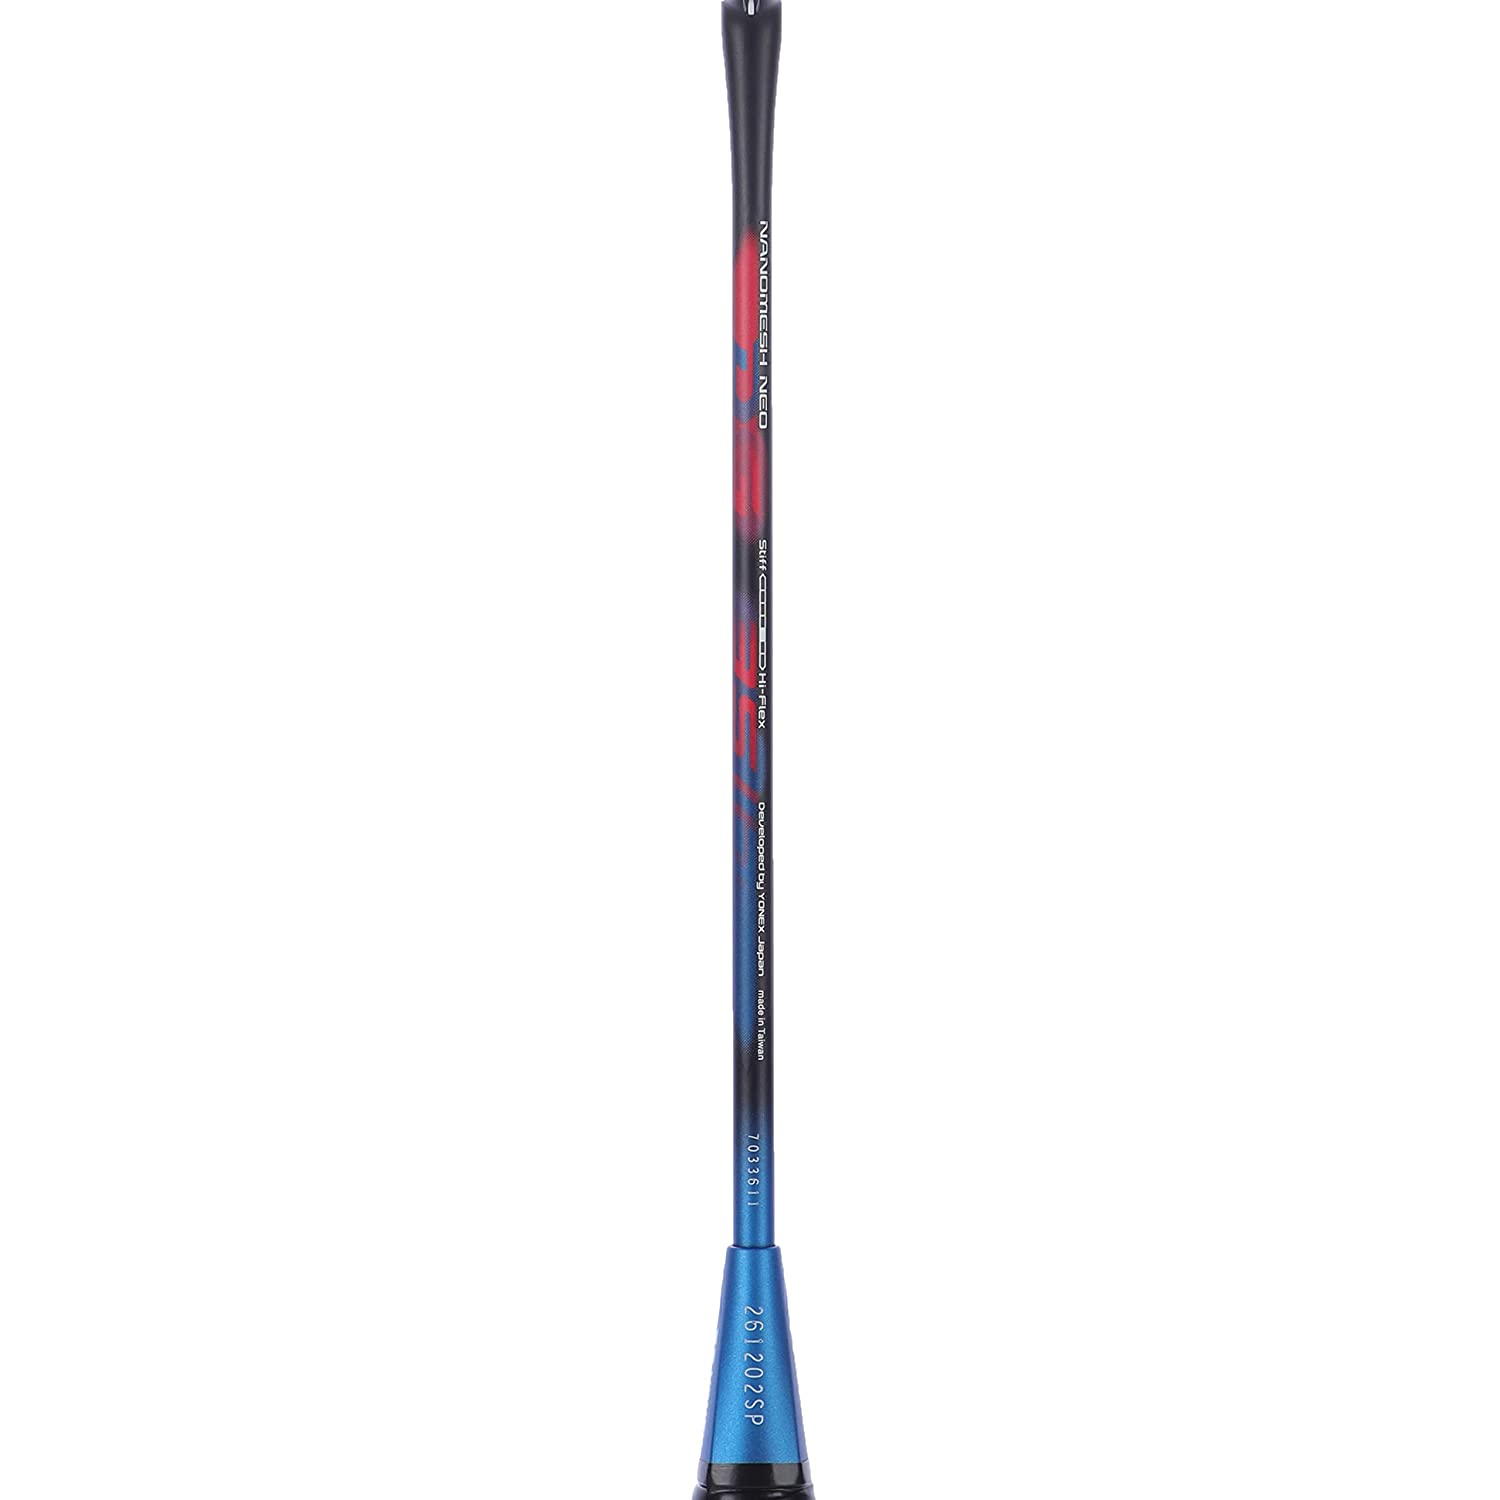 Yonex Astrox 7 DG Badminton Racquet - Black/Blue - Best Price online Prokicksports.com